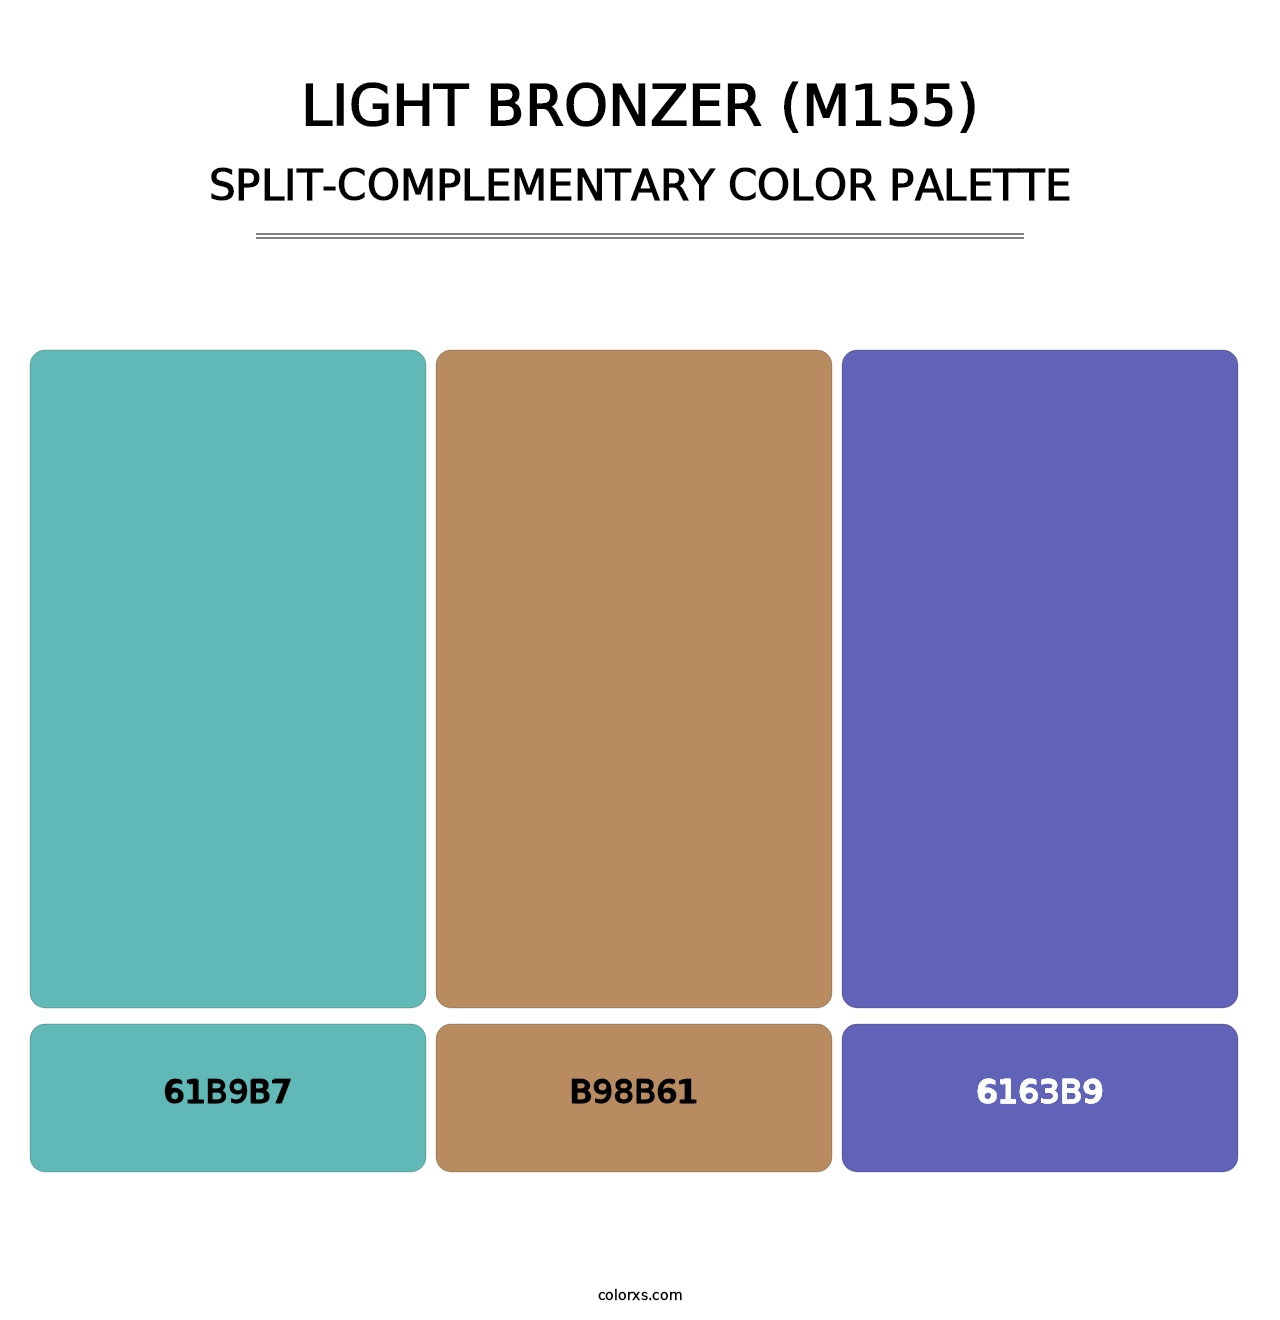 Light Bronzer (M155) - Split-Complementary Color Palette